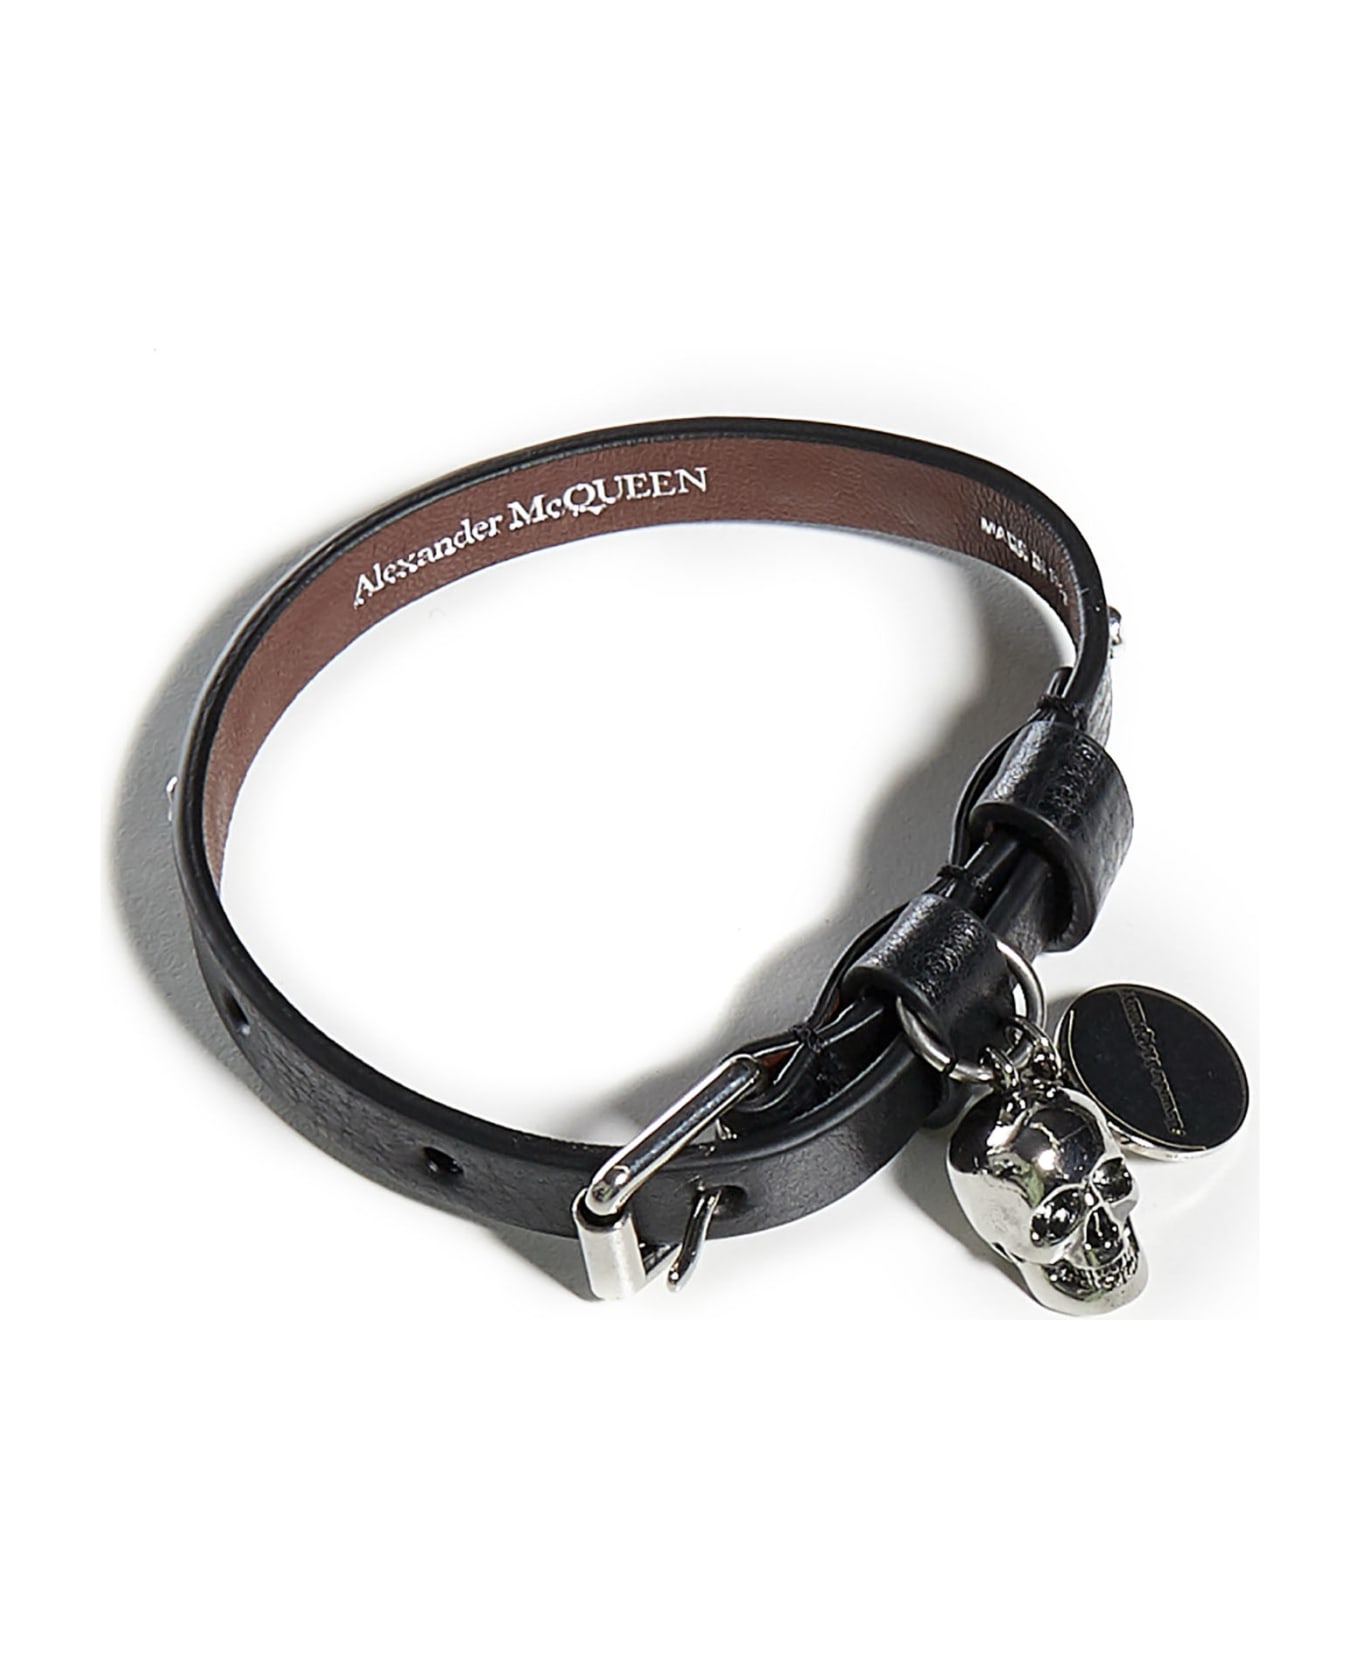 Alexander McQueen Single Wrap Bracelet - Black ブレスレット